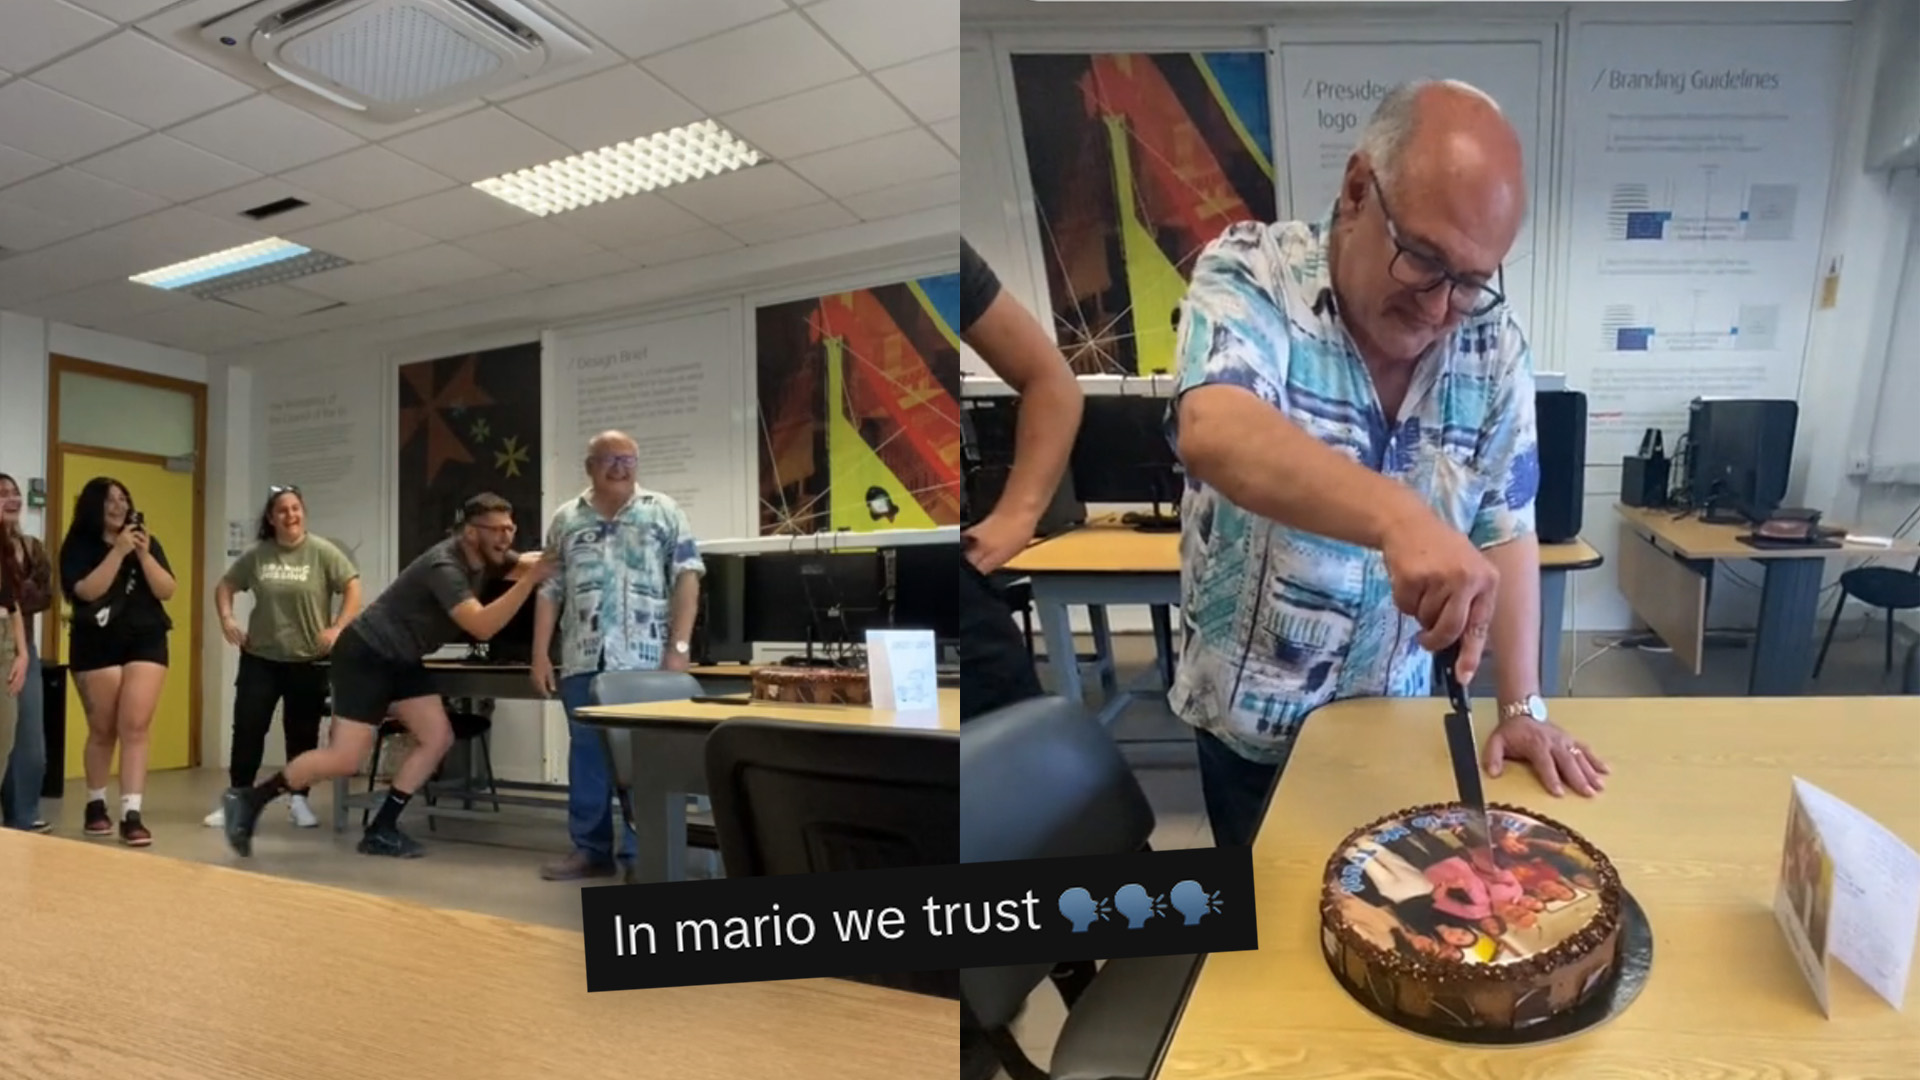 Wholesome TikTok Captures Students' Surprise for Beloved Teacher